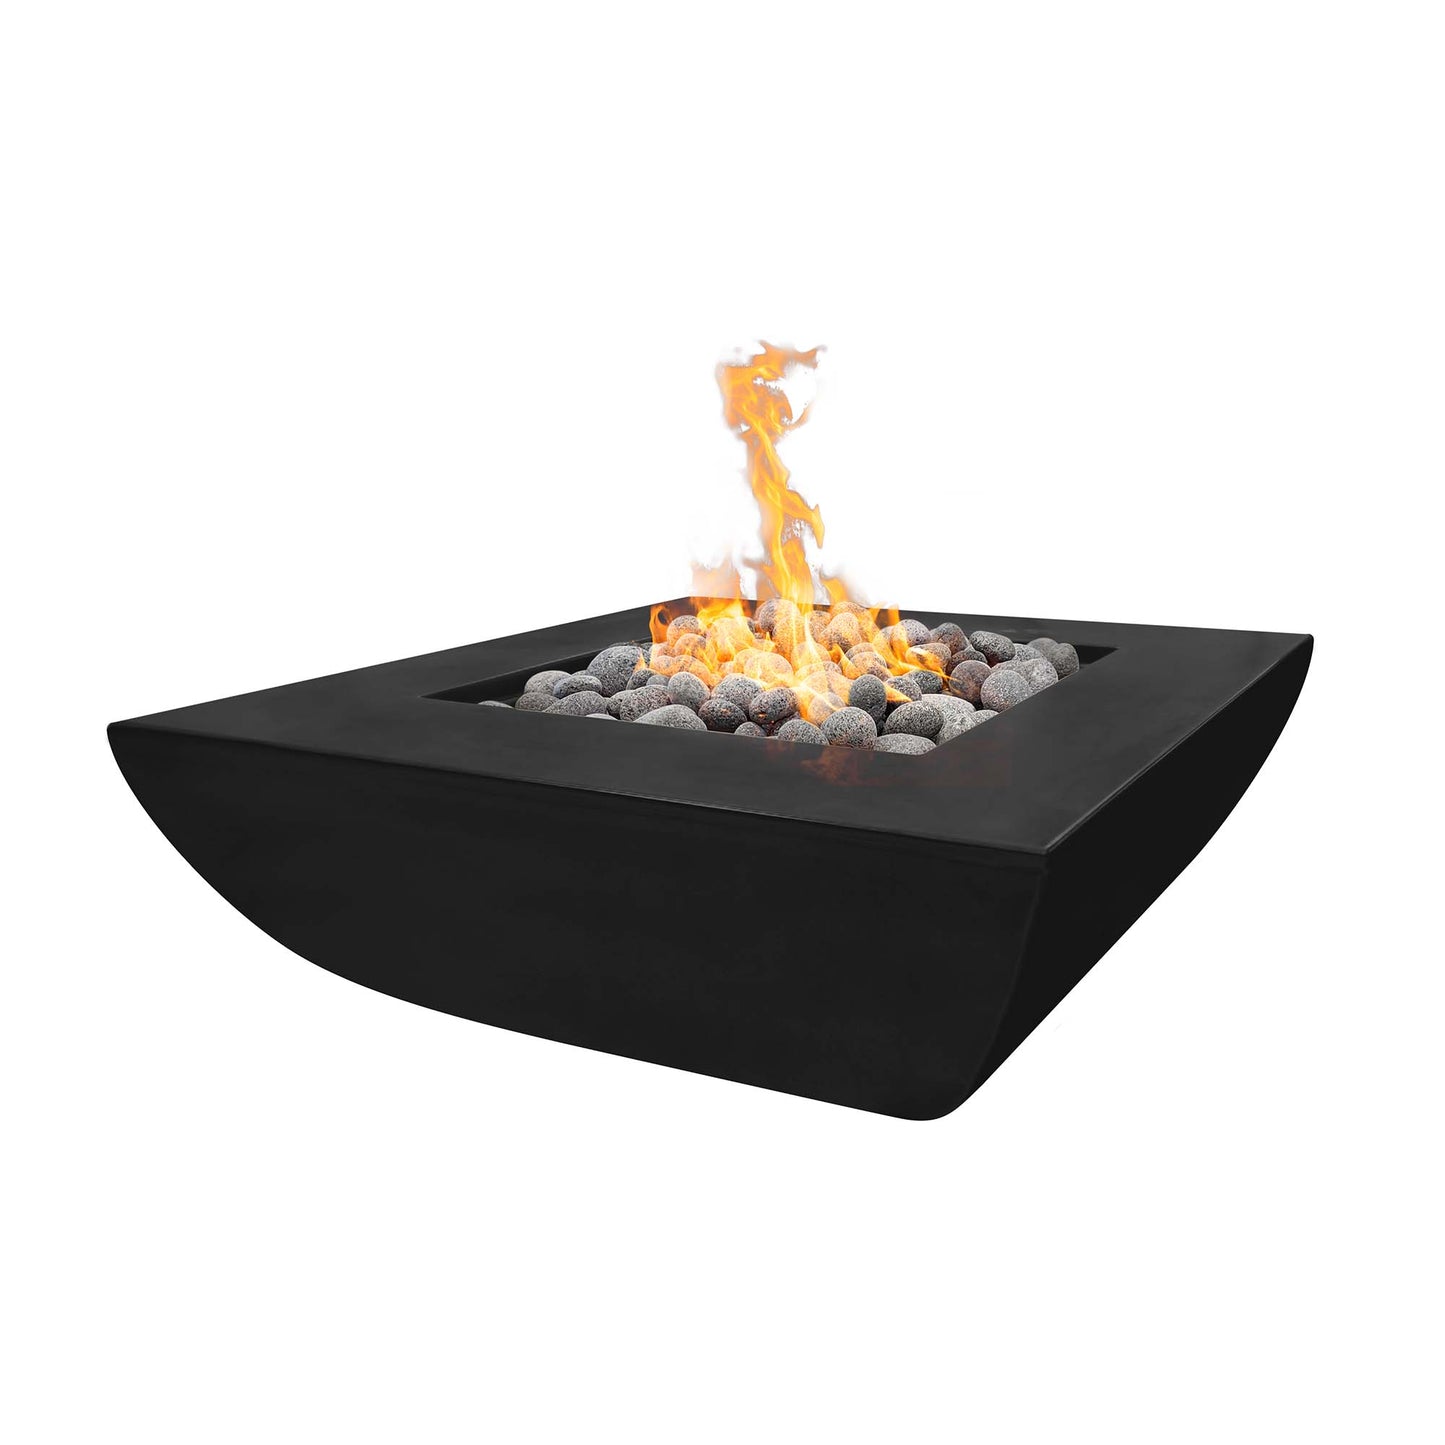 The Outdoor Plus Square Avalon 42" Ash GFRC Concrete Liquid Propane Fire Pit with Match Lit with Flame Sense Ignition